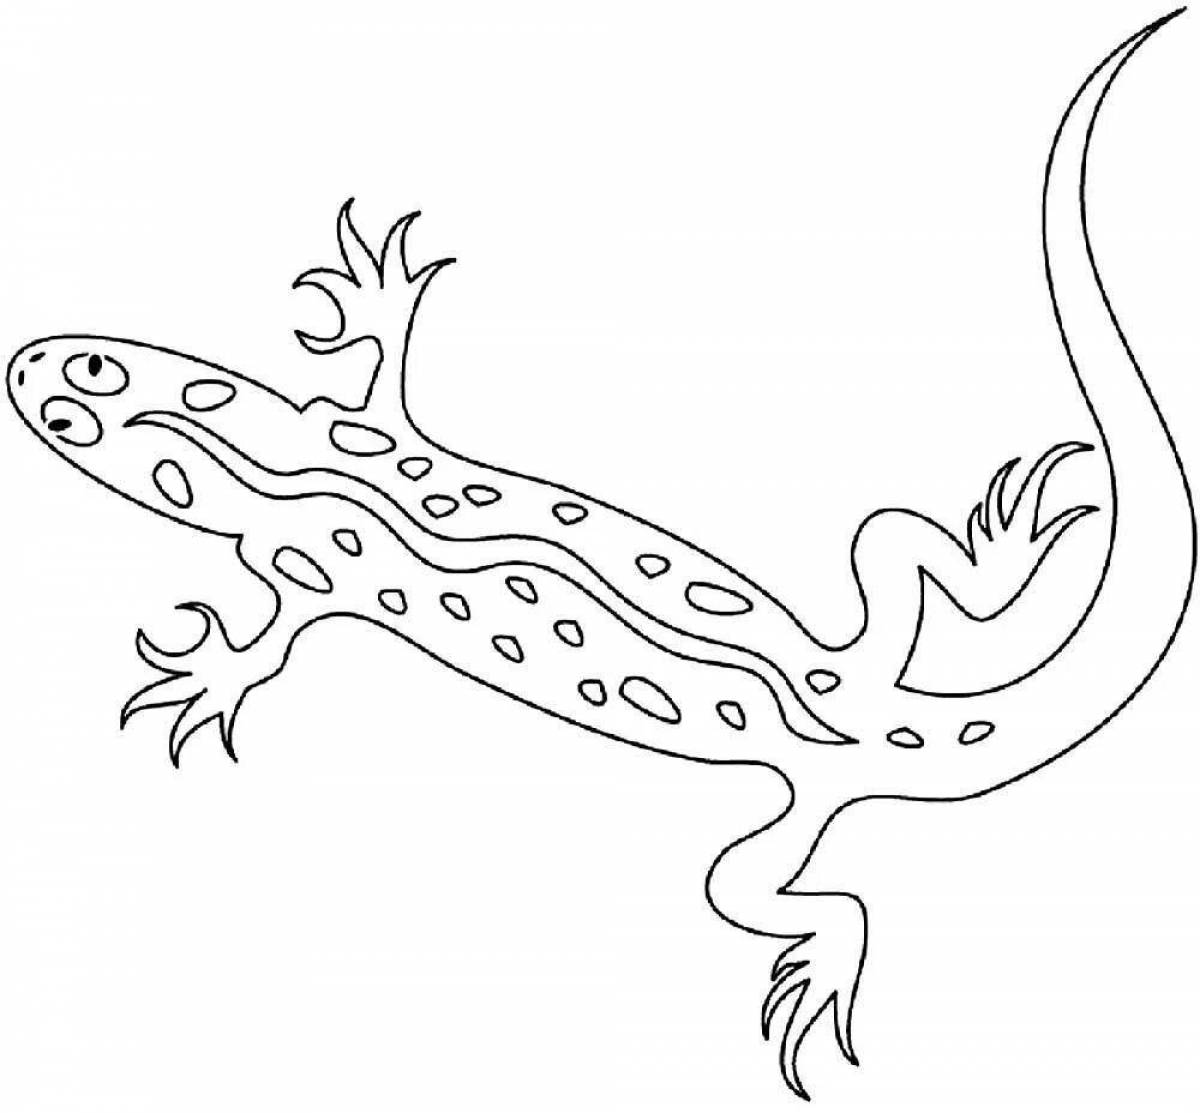 Coloring funny lizard